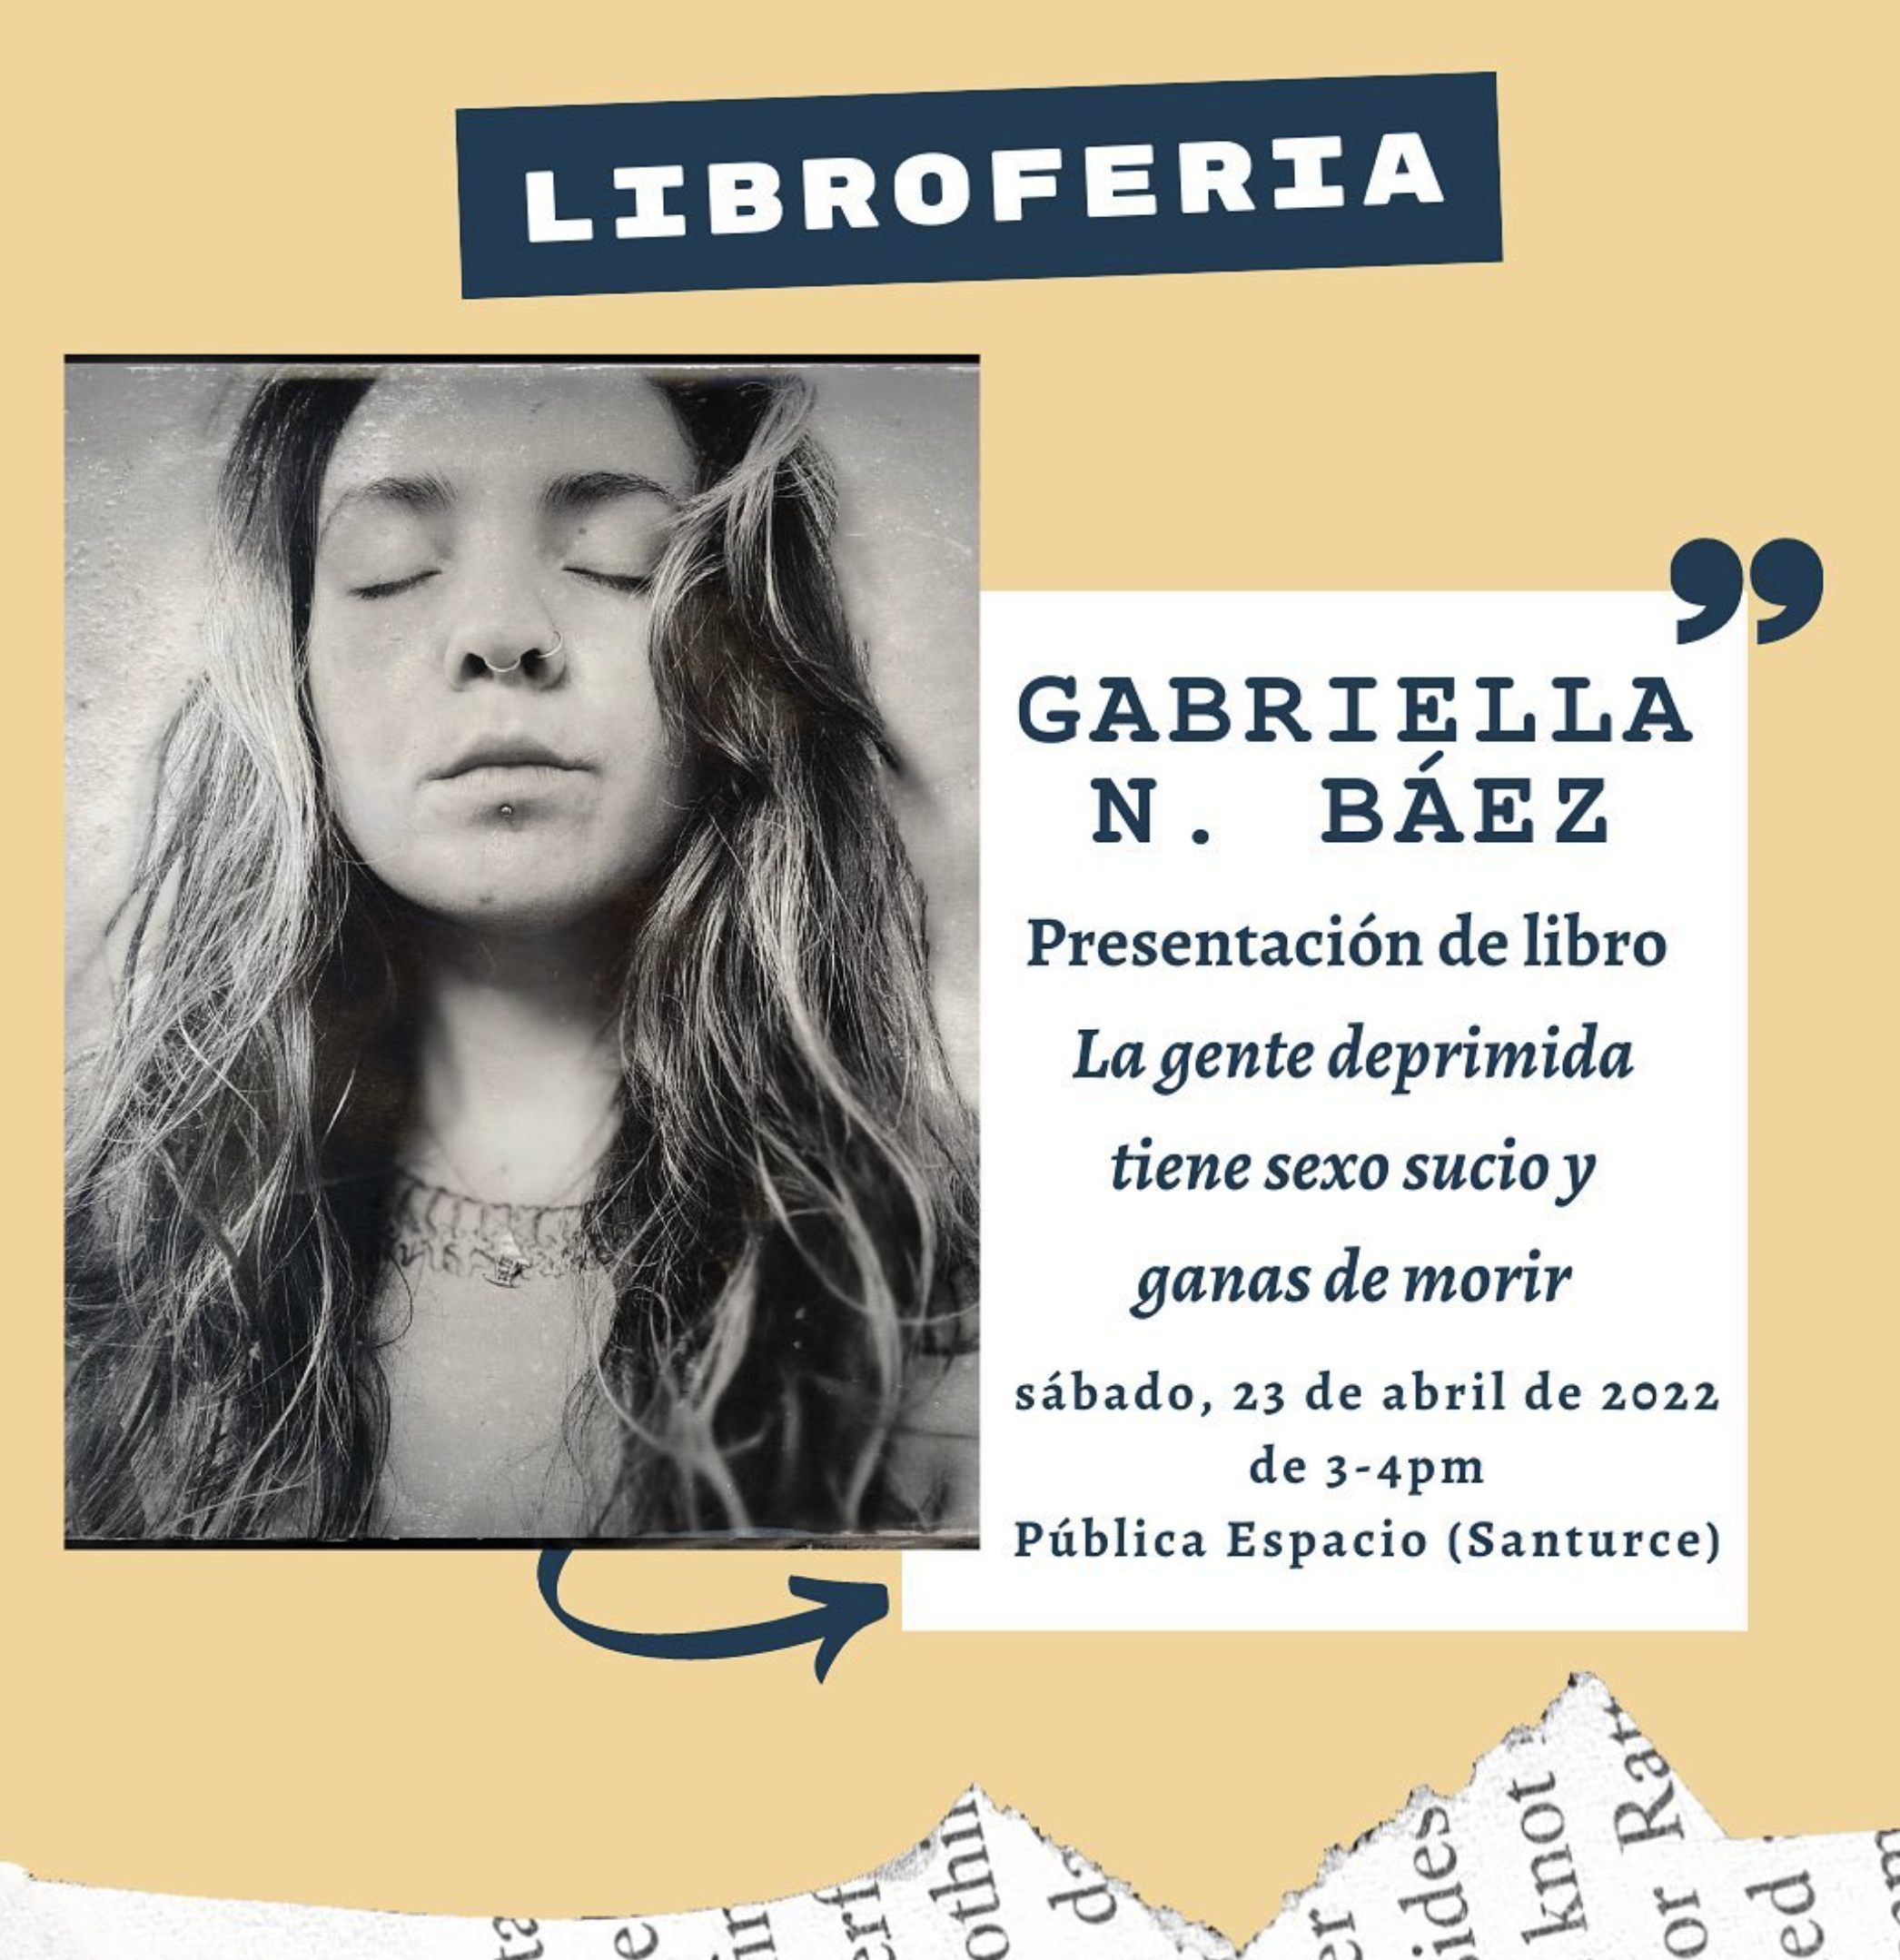 Book presentation at Libroferia!